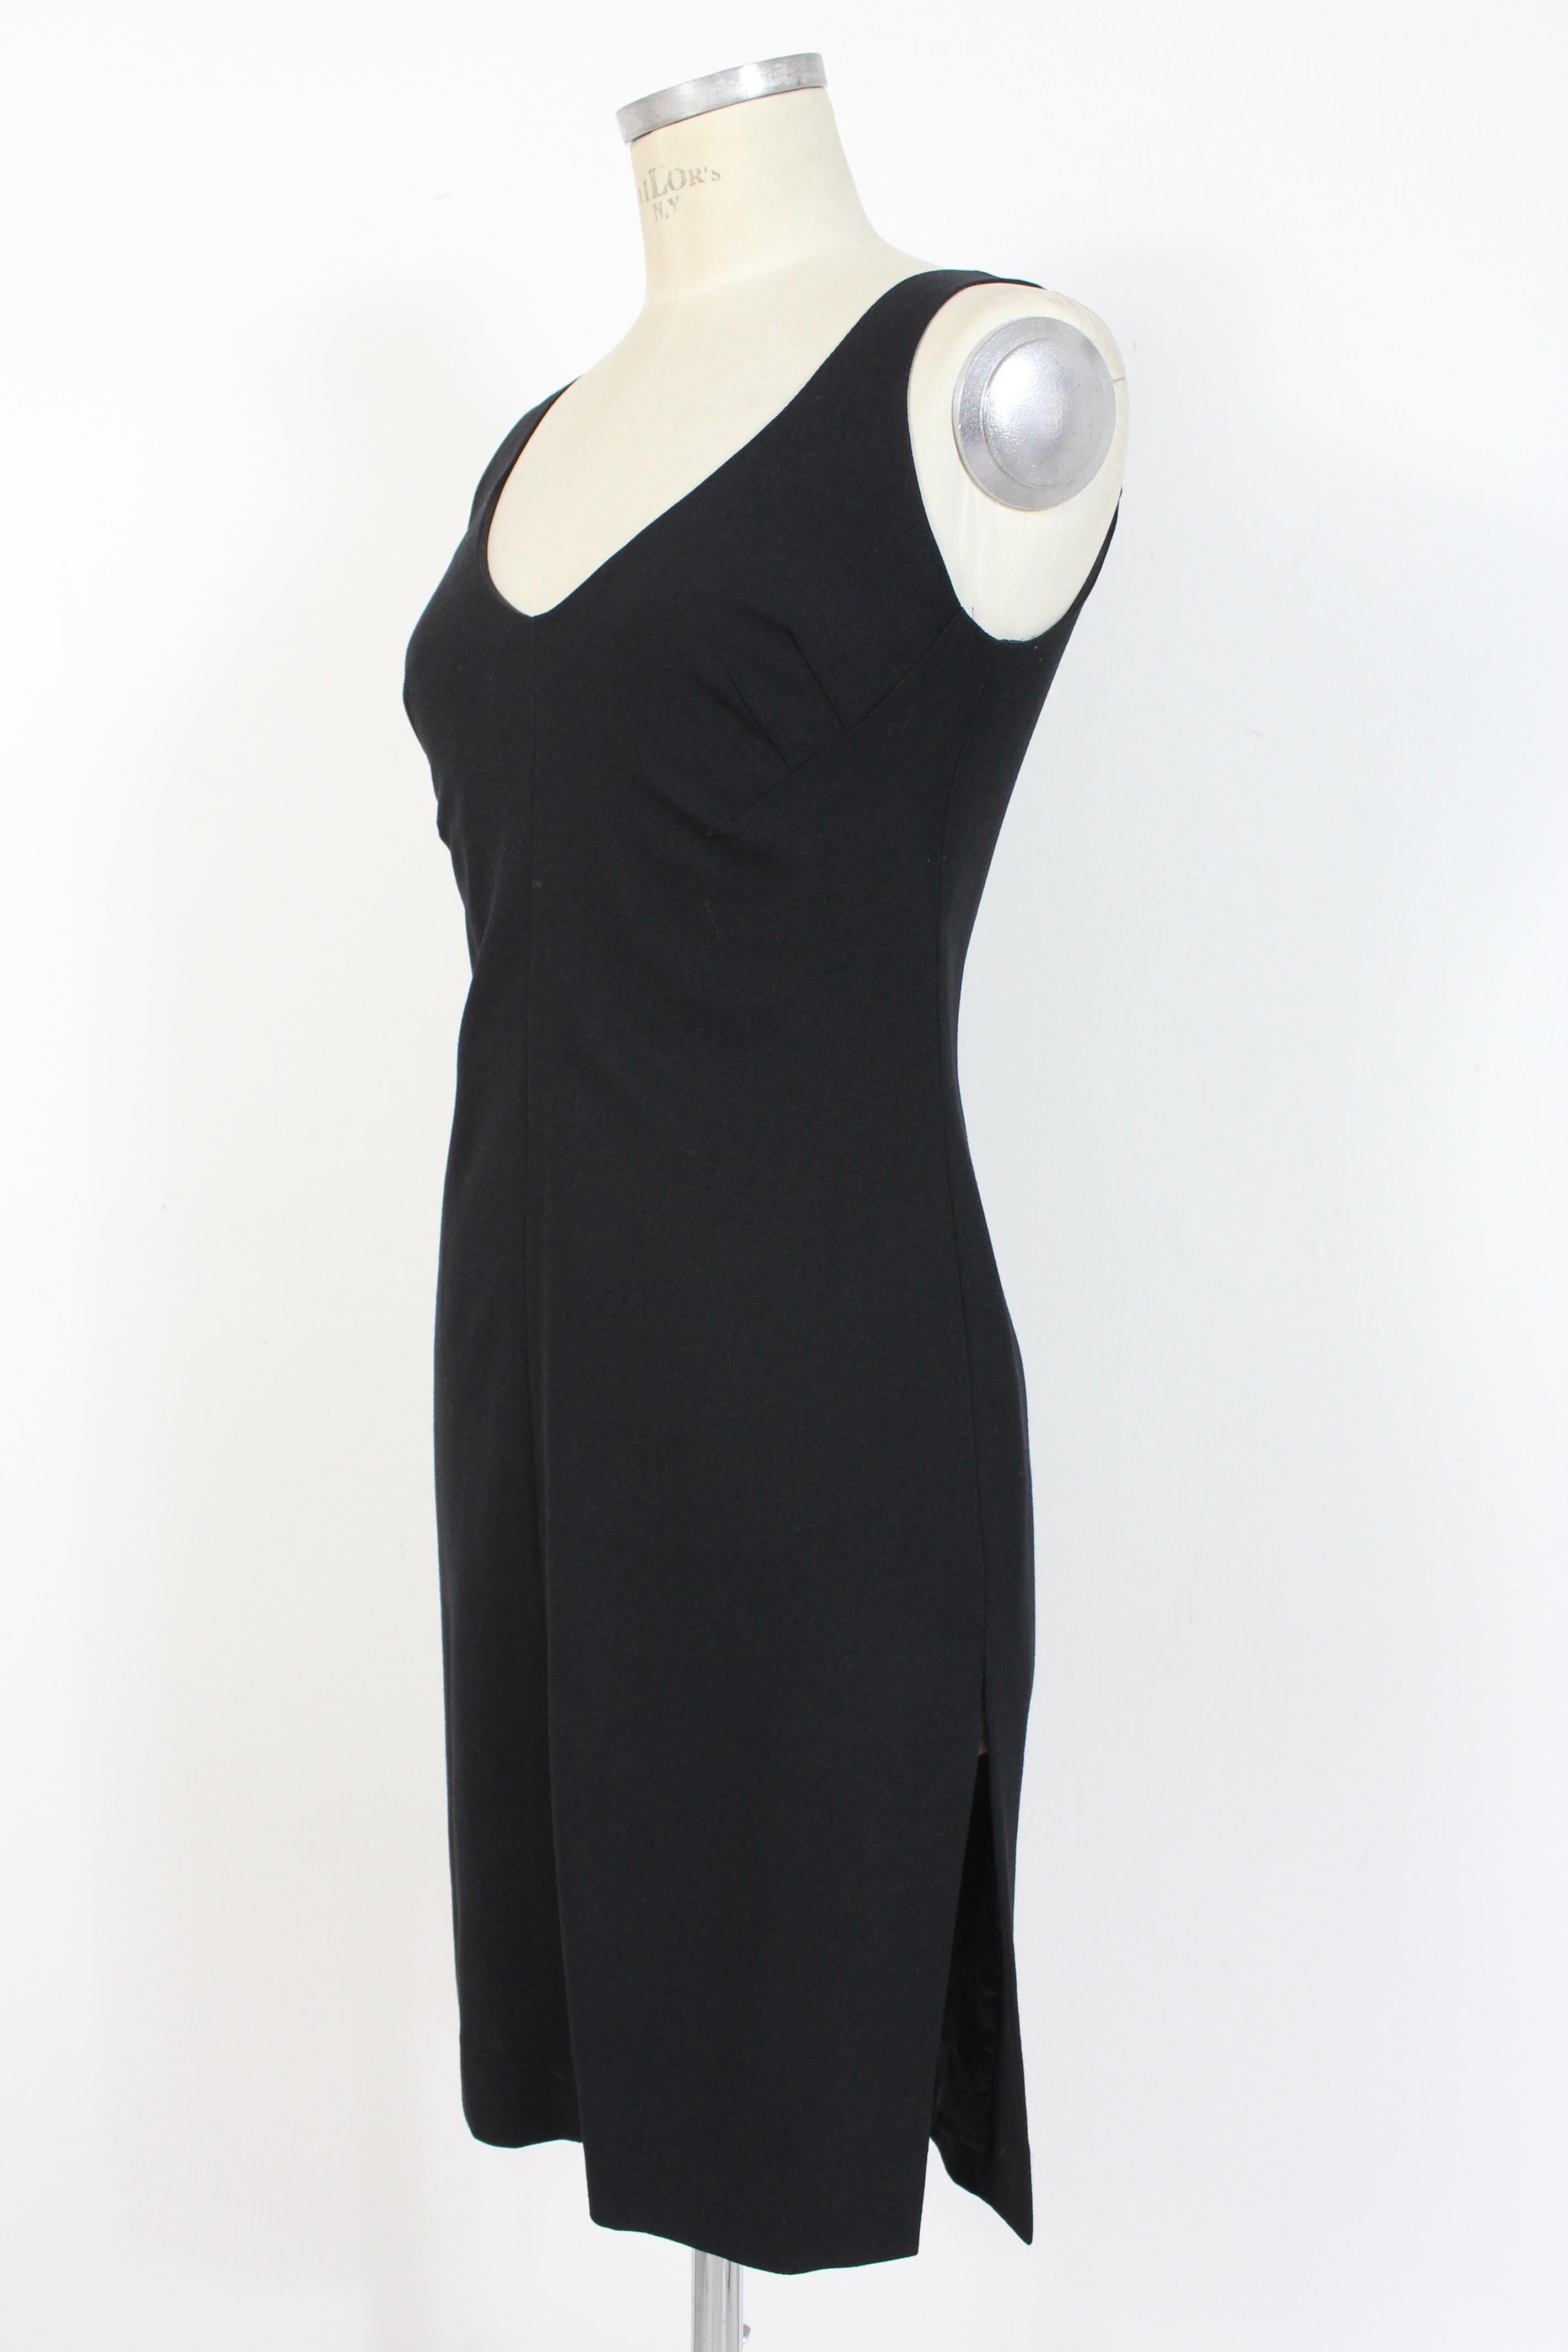 Gianfranco Ferre Black Wool Evening Suit Dress 2